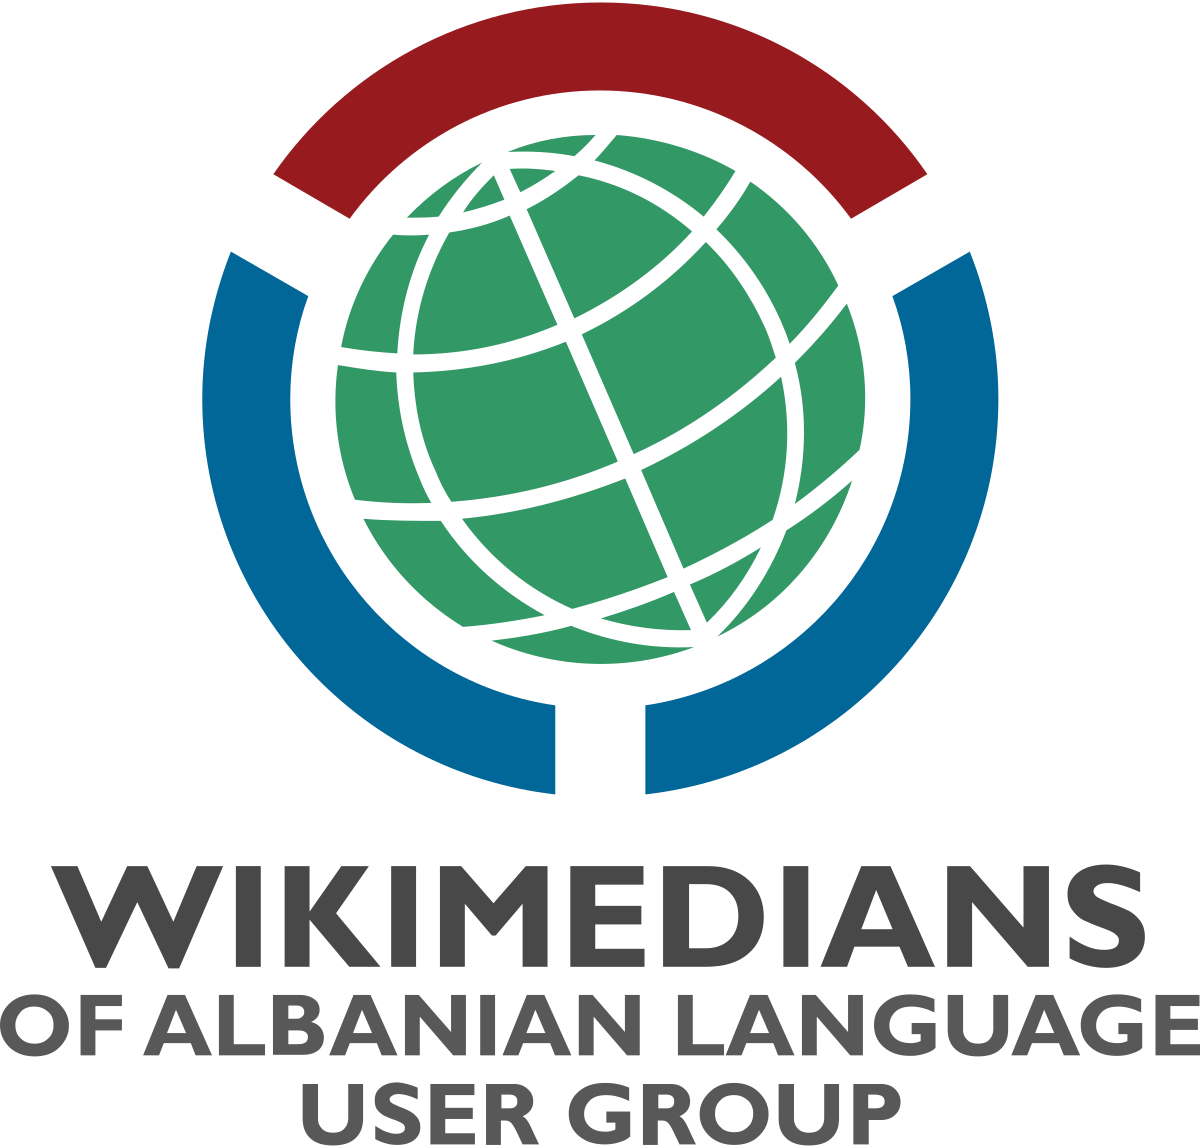 Wikimedia of Albanian language user group